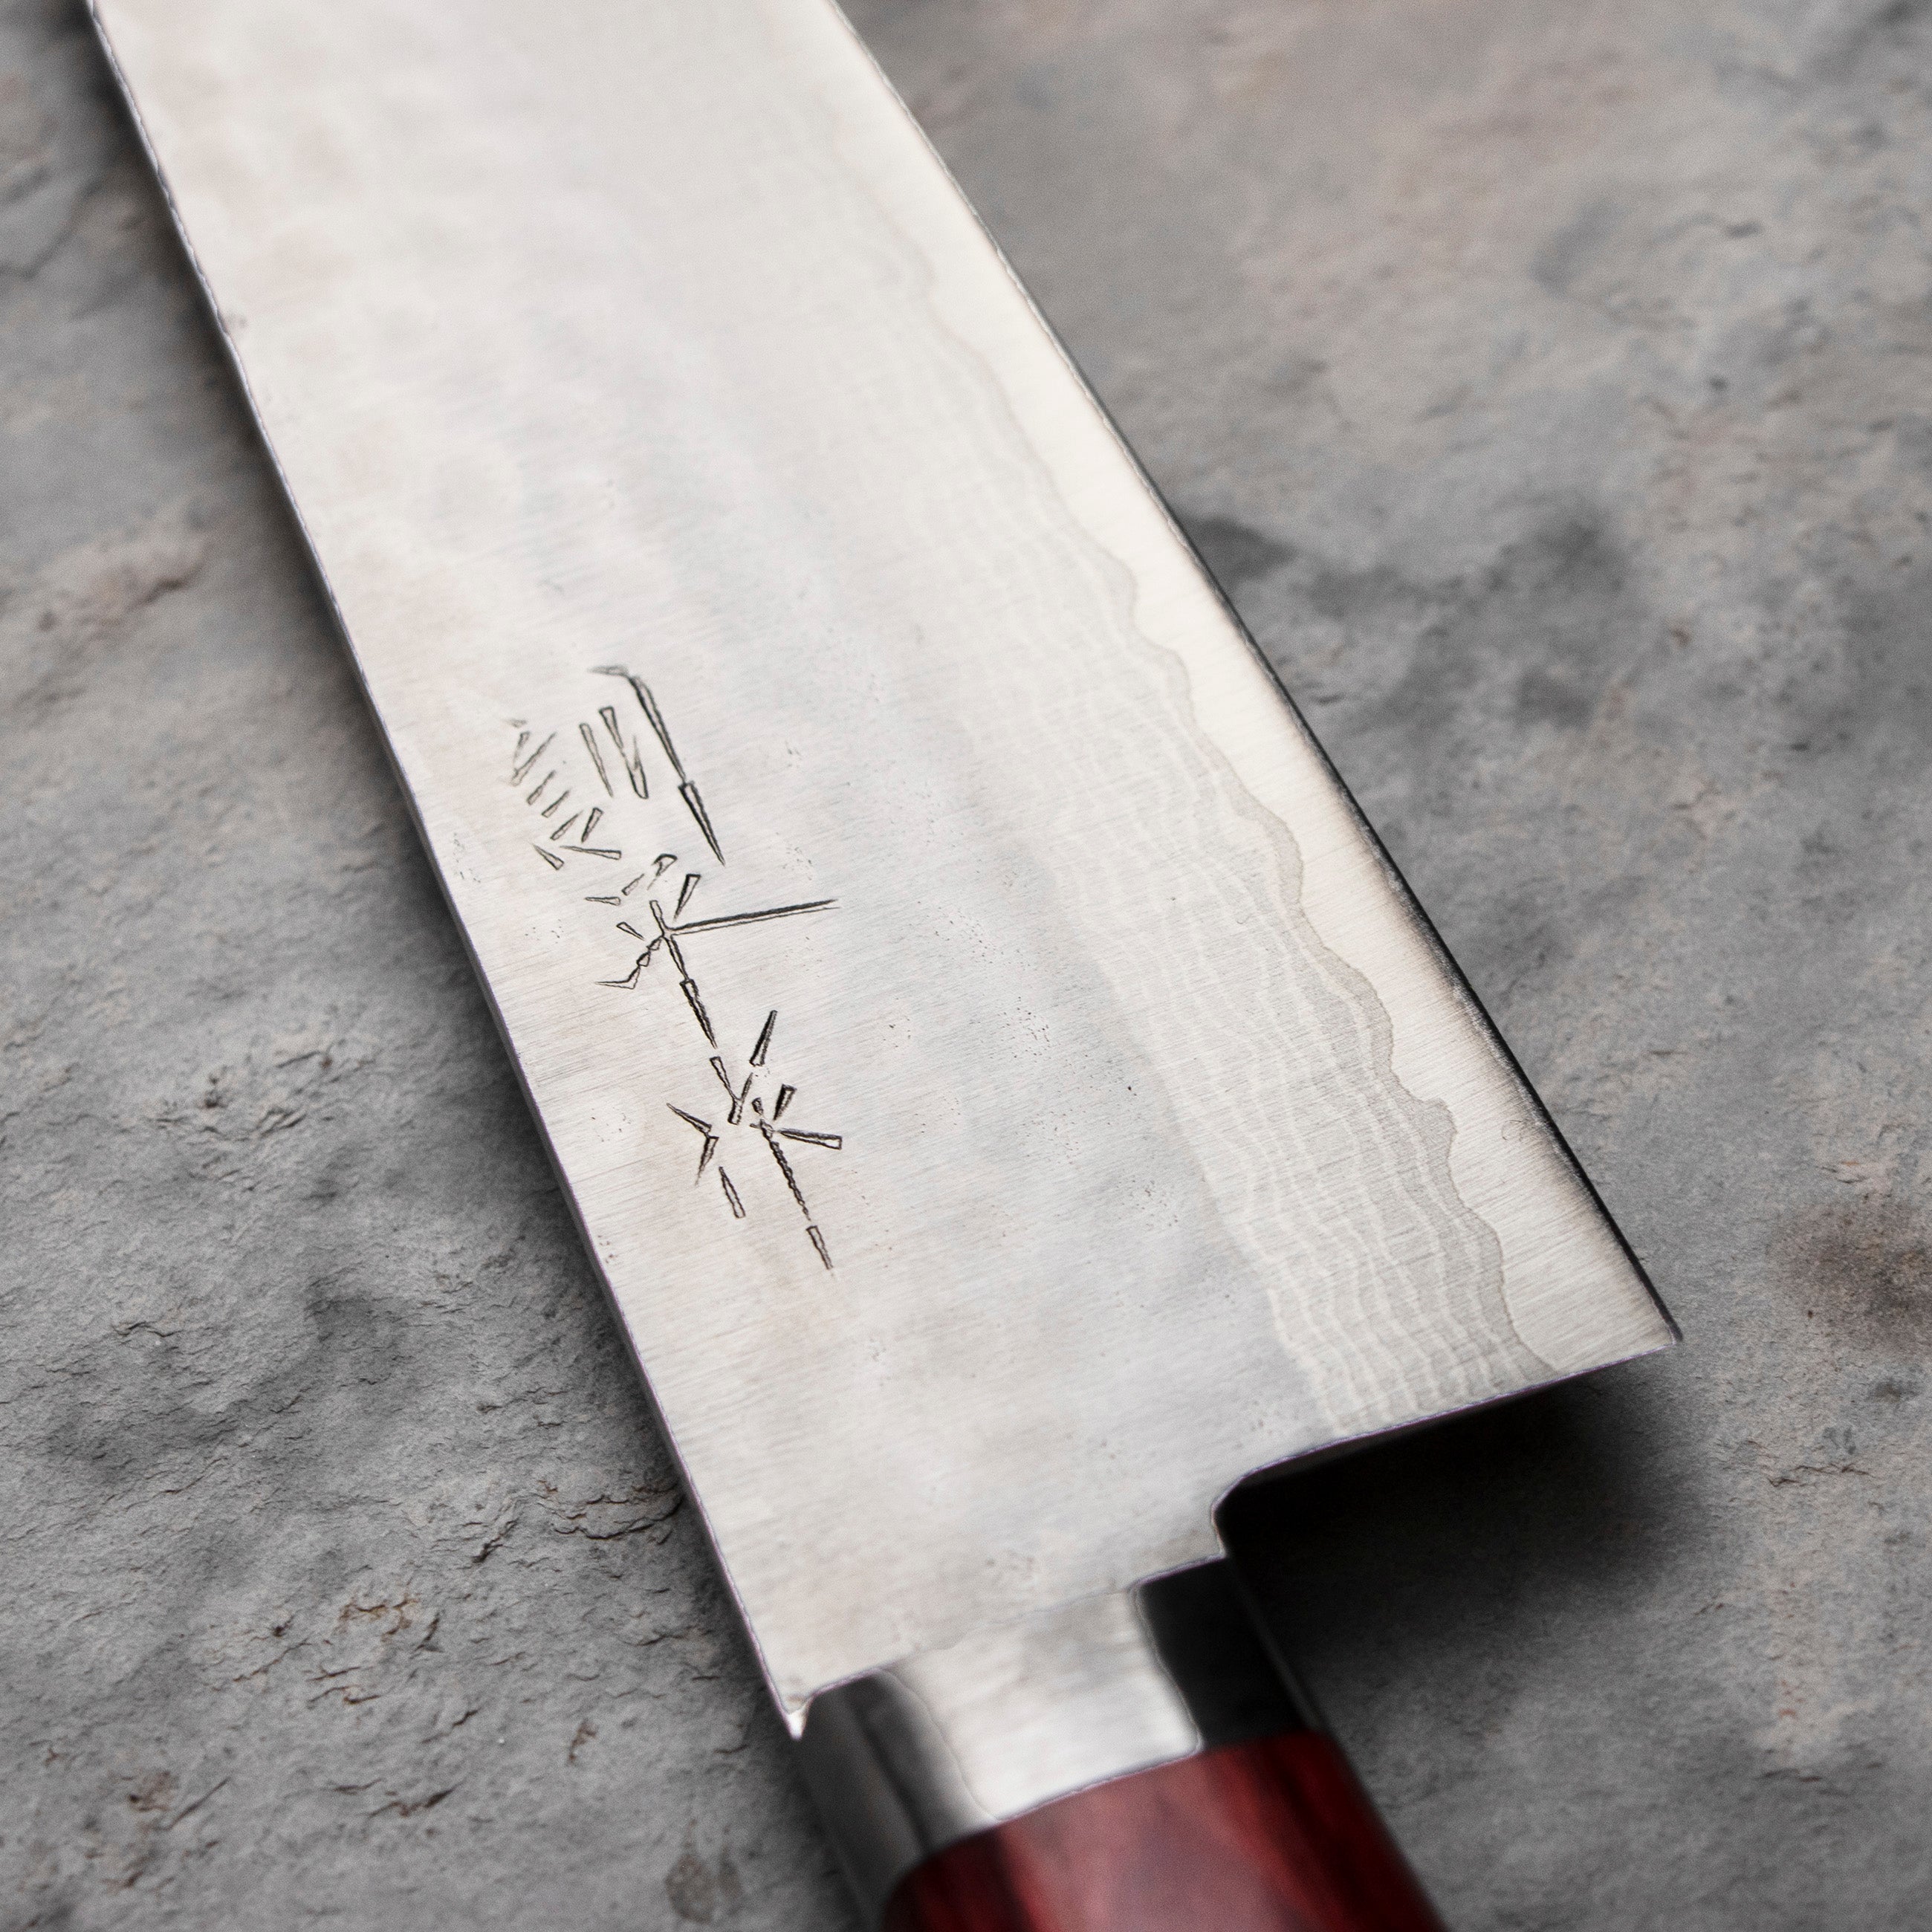 Nůž šéfkuchařský 18 cm Kunio Masutani VG-10 Hammered Red Damascus